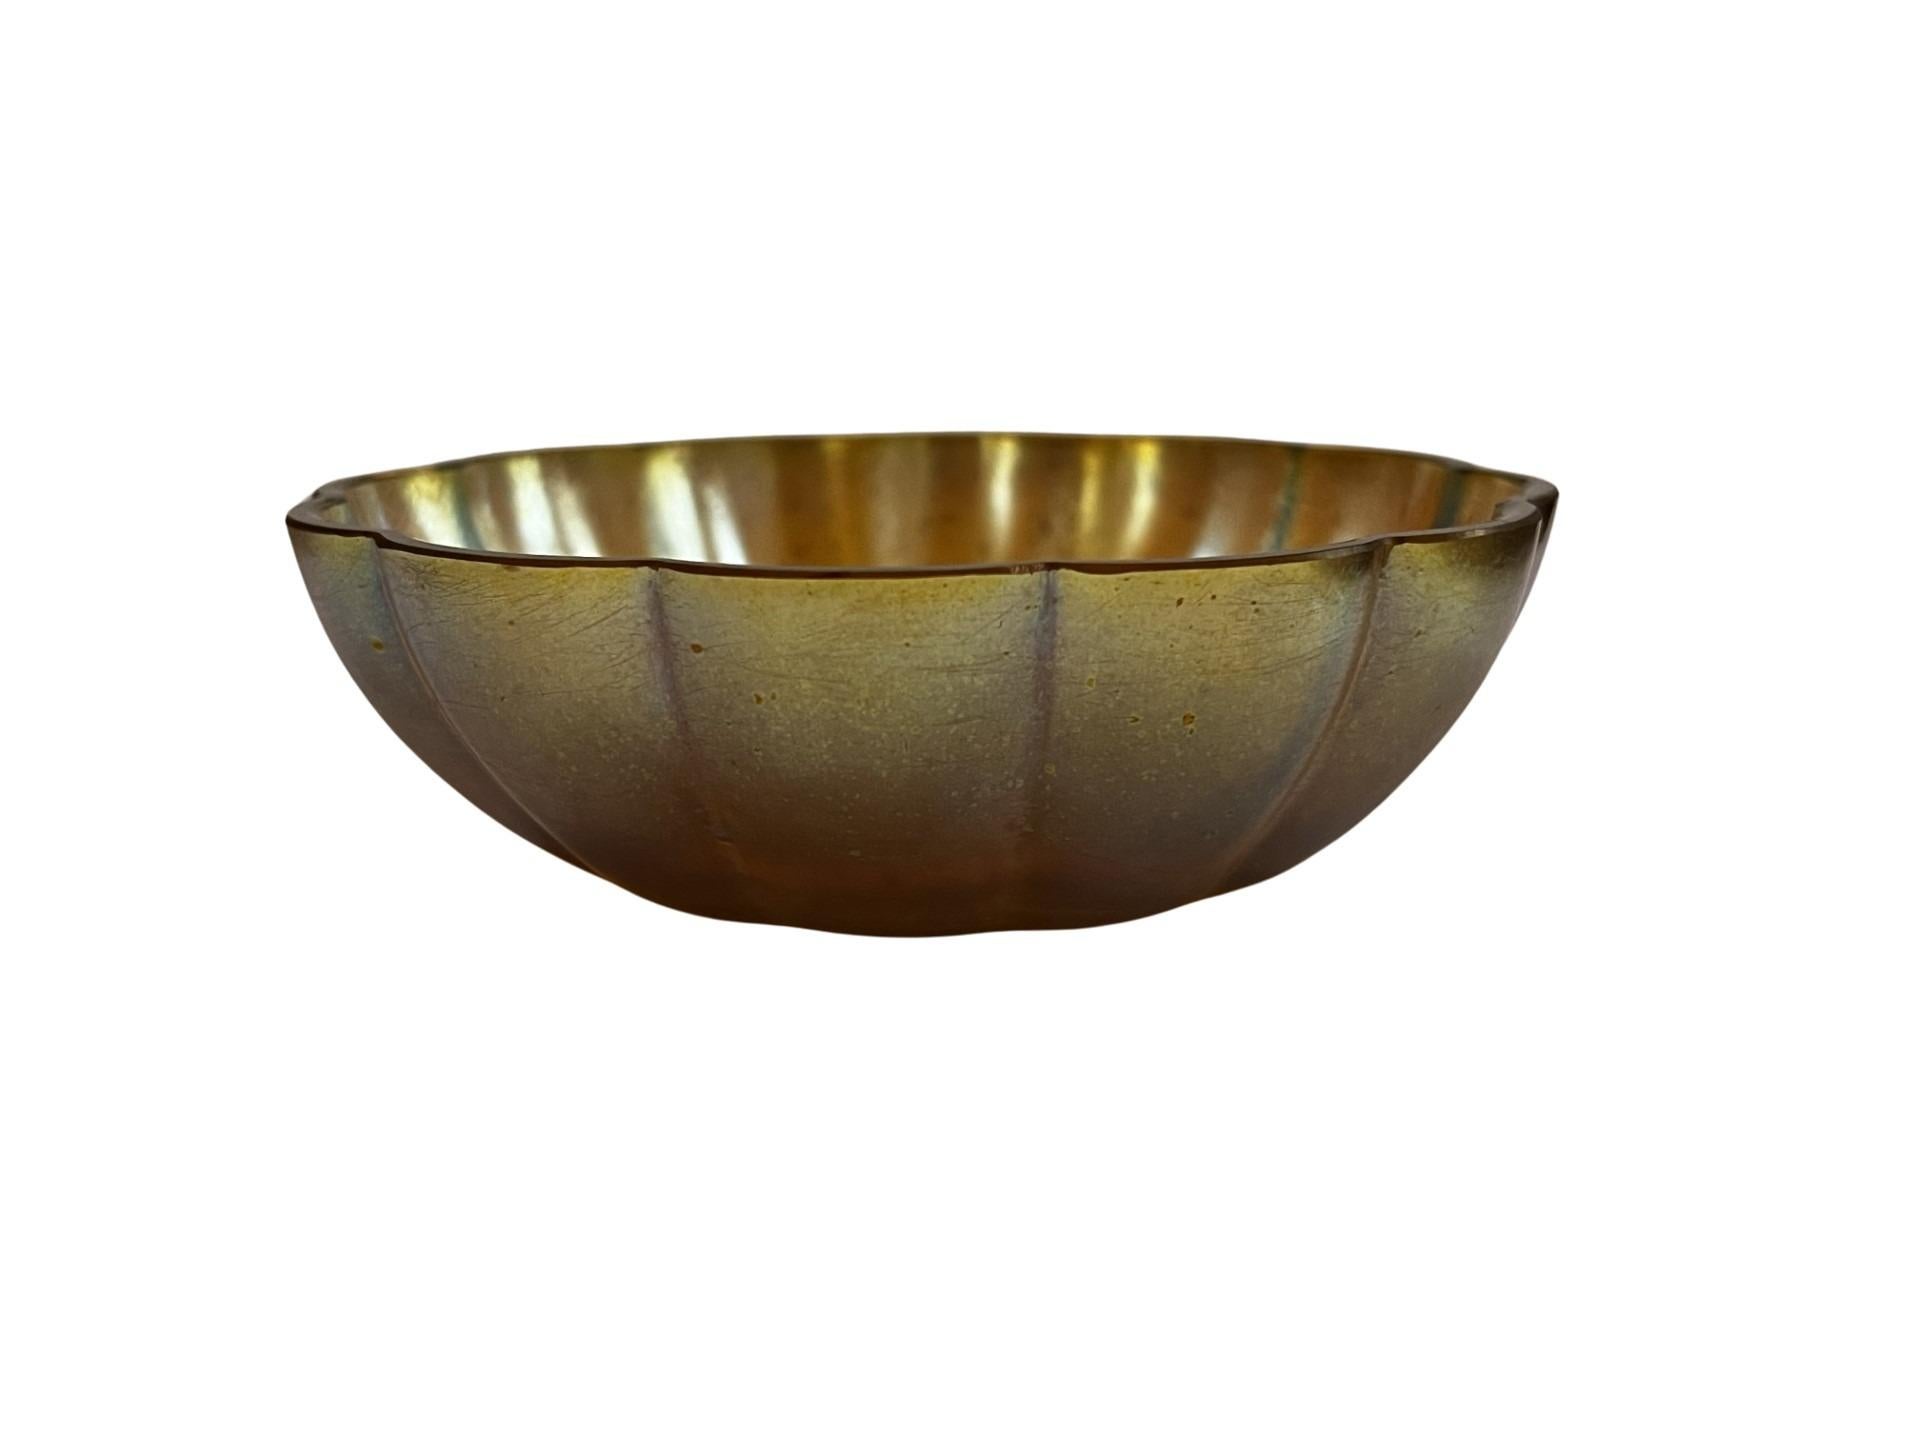 Fascinating bowl, iridiscent, WMF Myra glass, Lötz like, 1920s Art Deco Germany 3